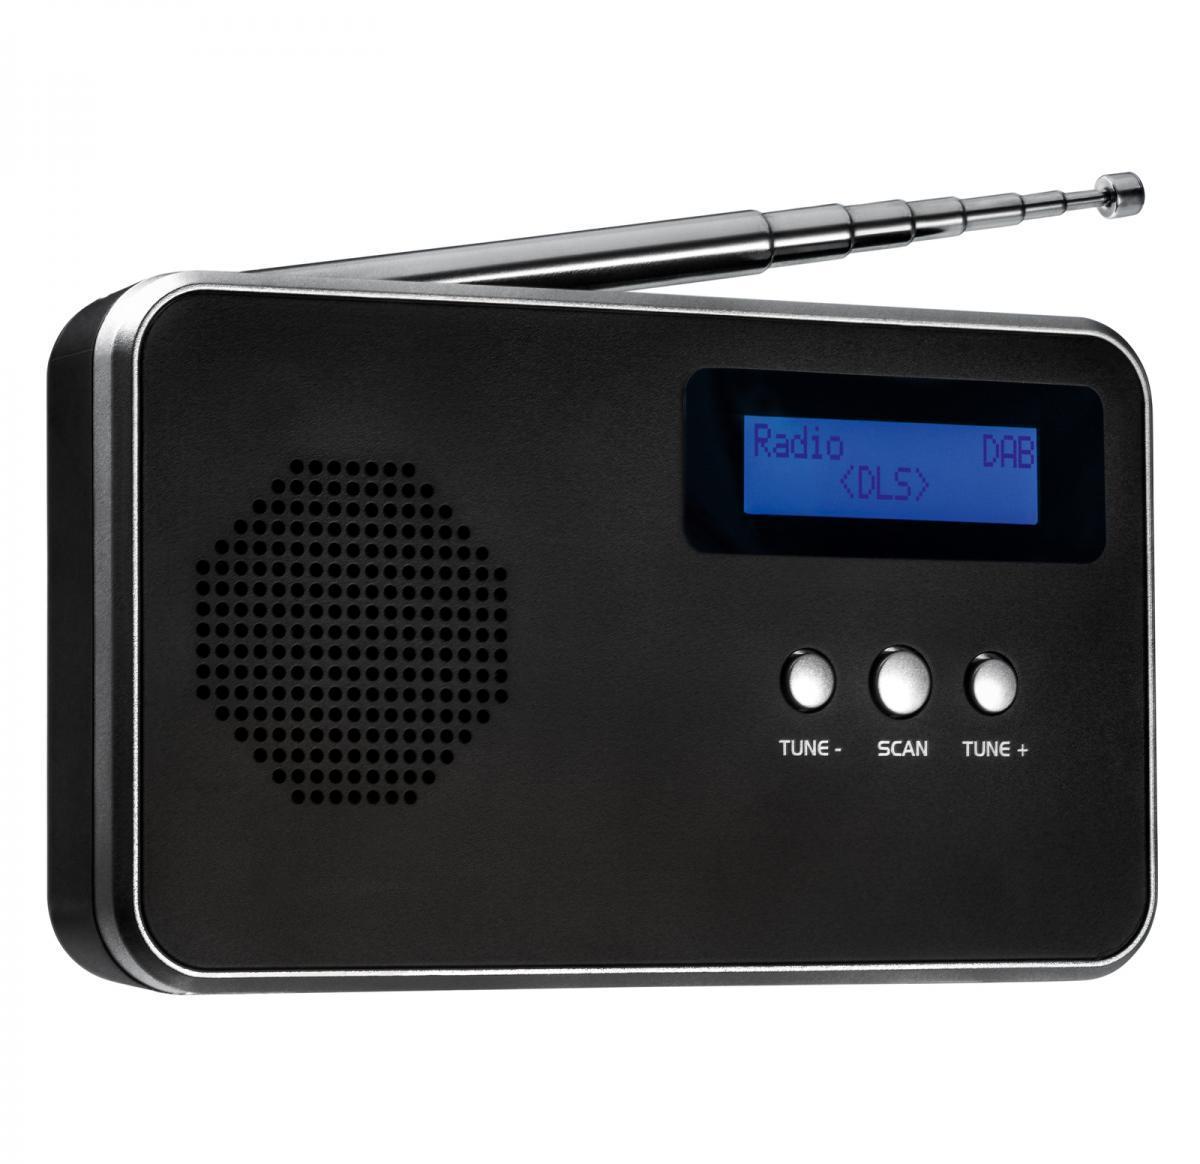 Portable digital radio FM / DAB+ -BARCELOS BLACK SILVER